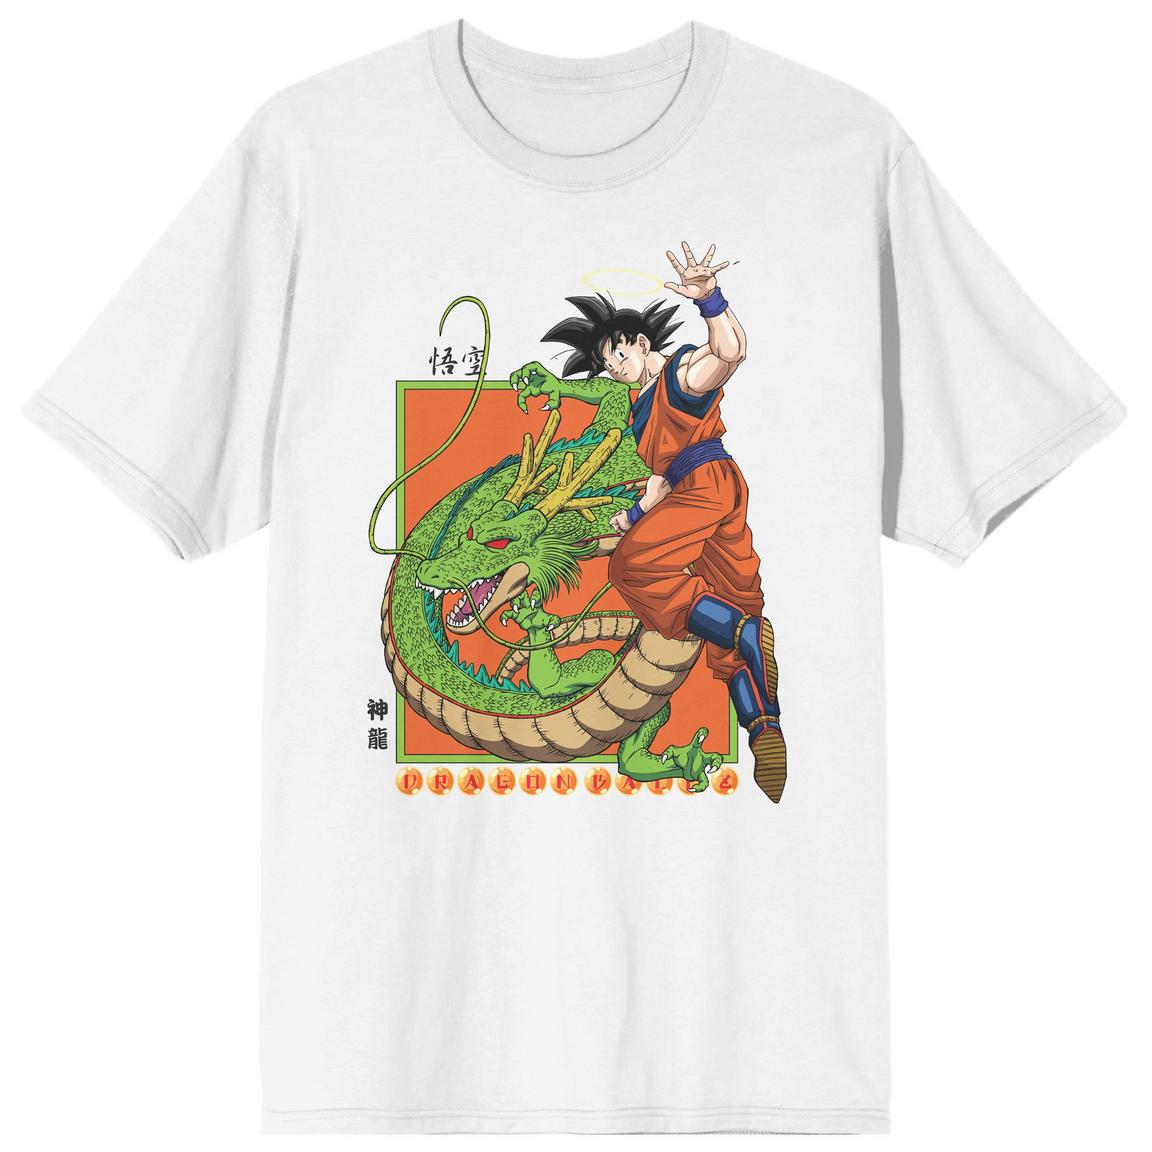 Dragon Ball Z Goku and Shenron Men's White Short Sleeve Graphic T-Shirt, Size: Large, Bioworld Merchandising